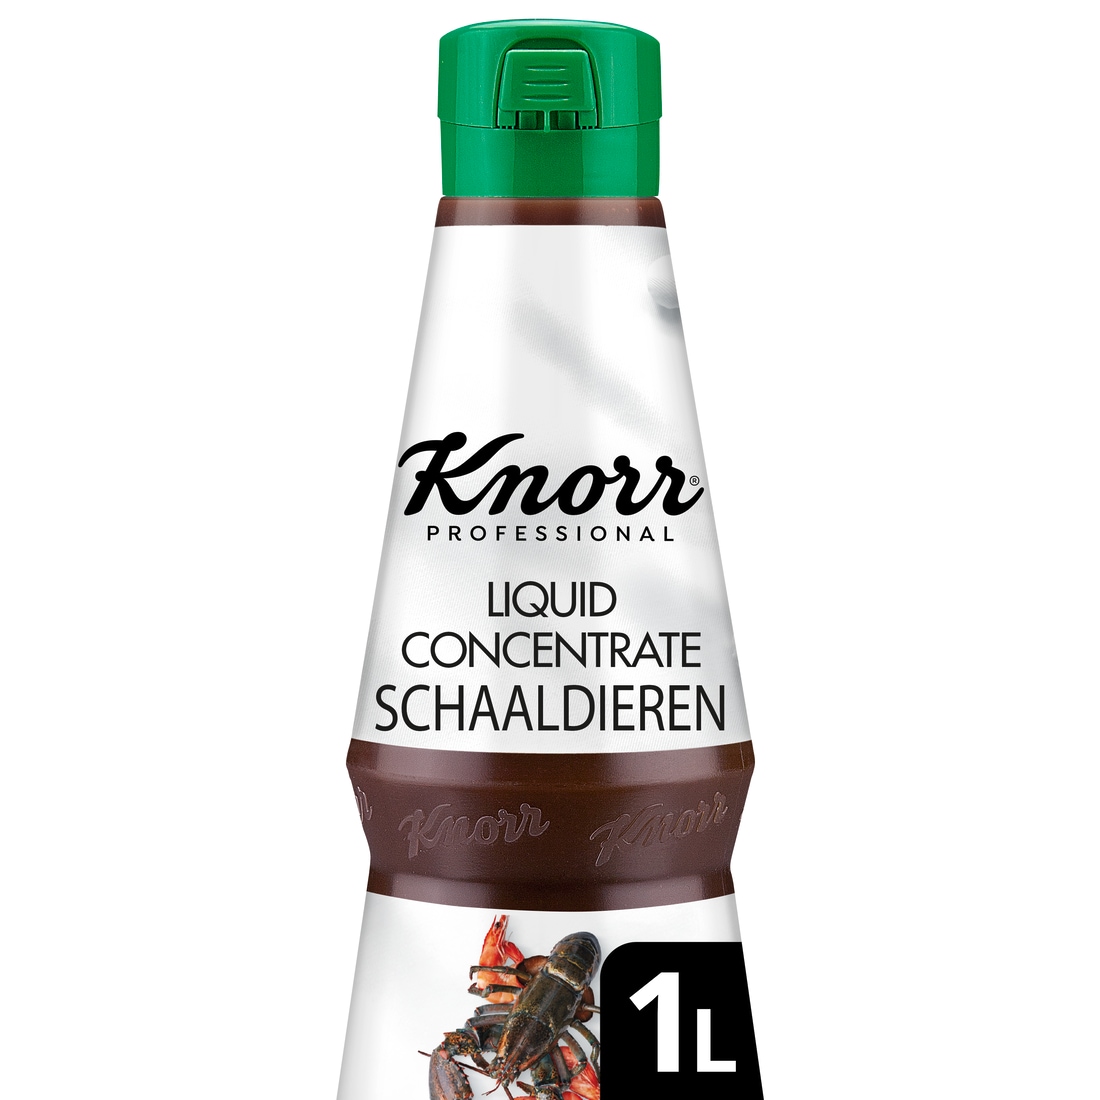 Knorr Professional Liquid Concentrate Schaaldieren 1L - 